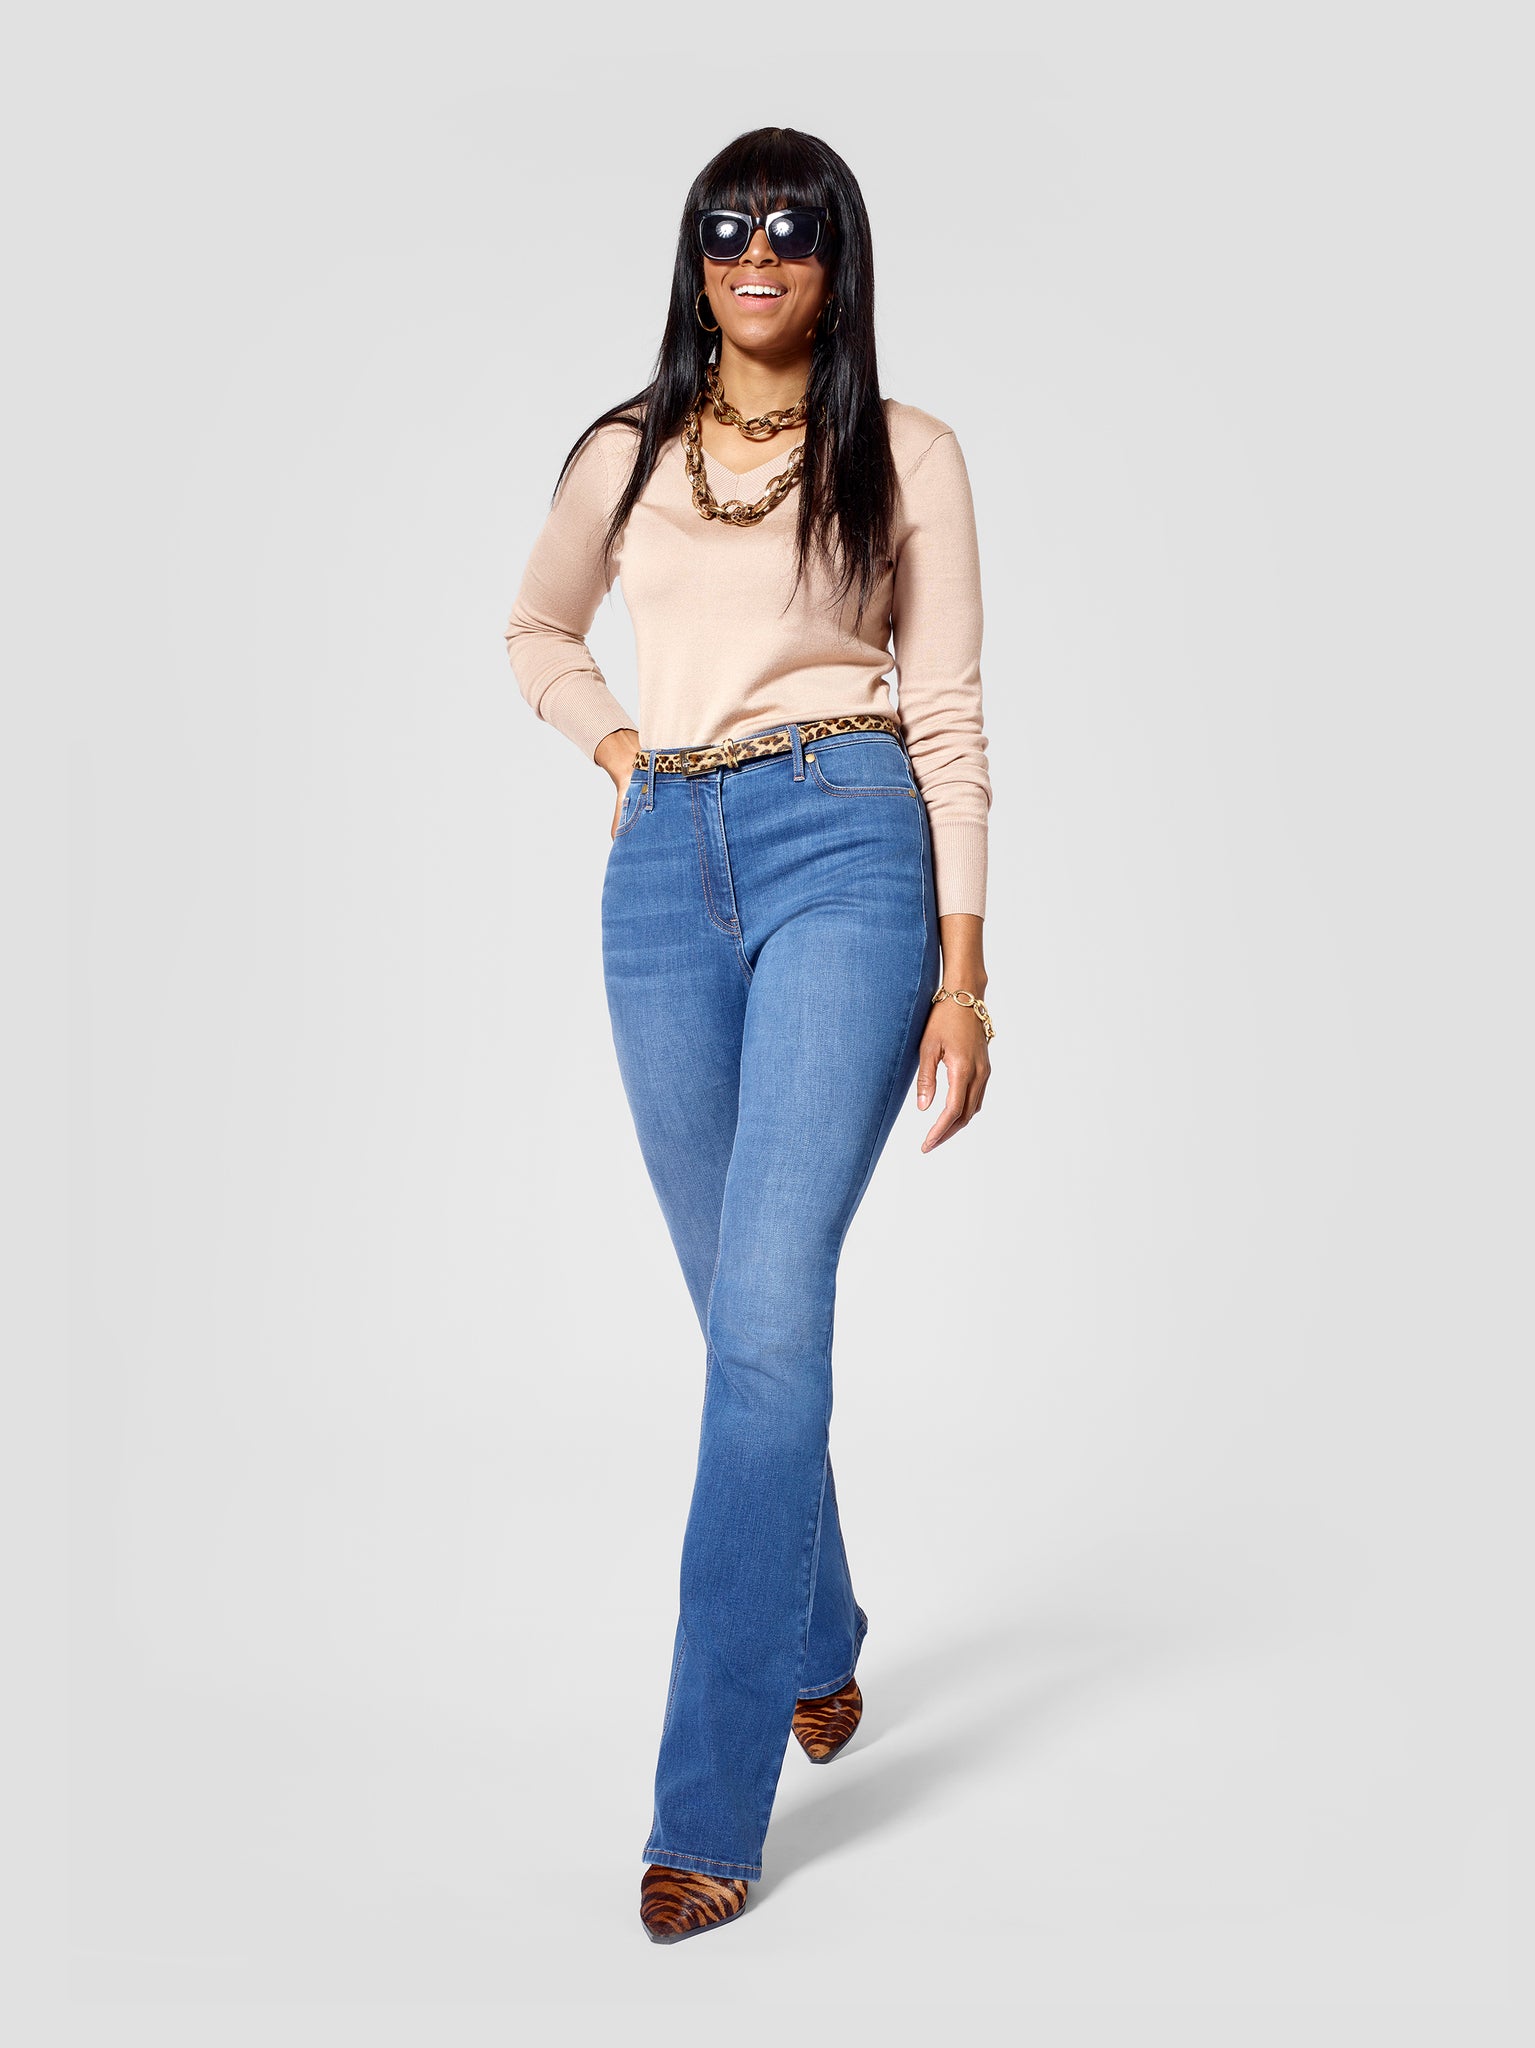 Shop Women's Bootcut Jeans in Canada